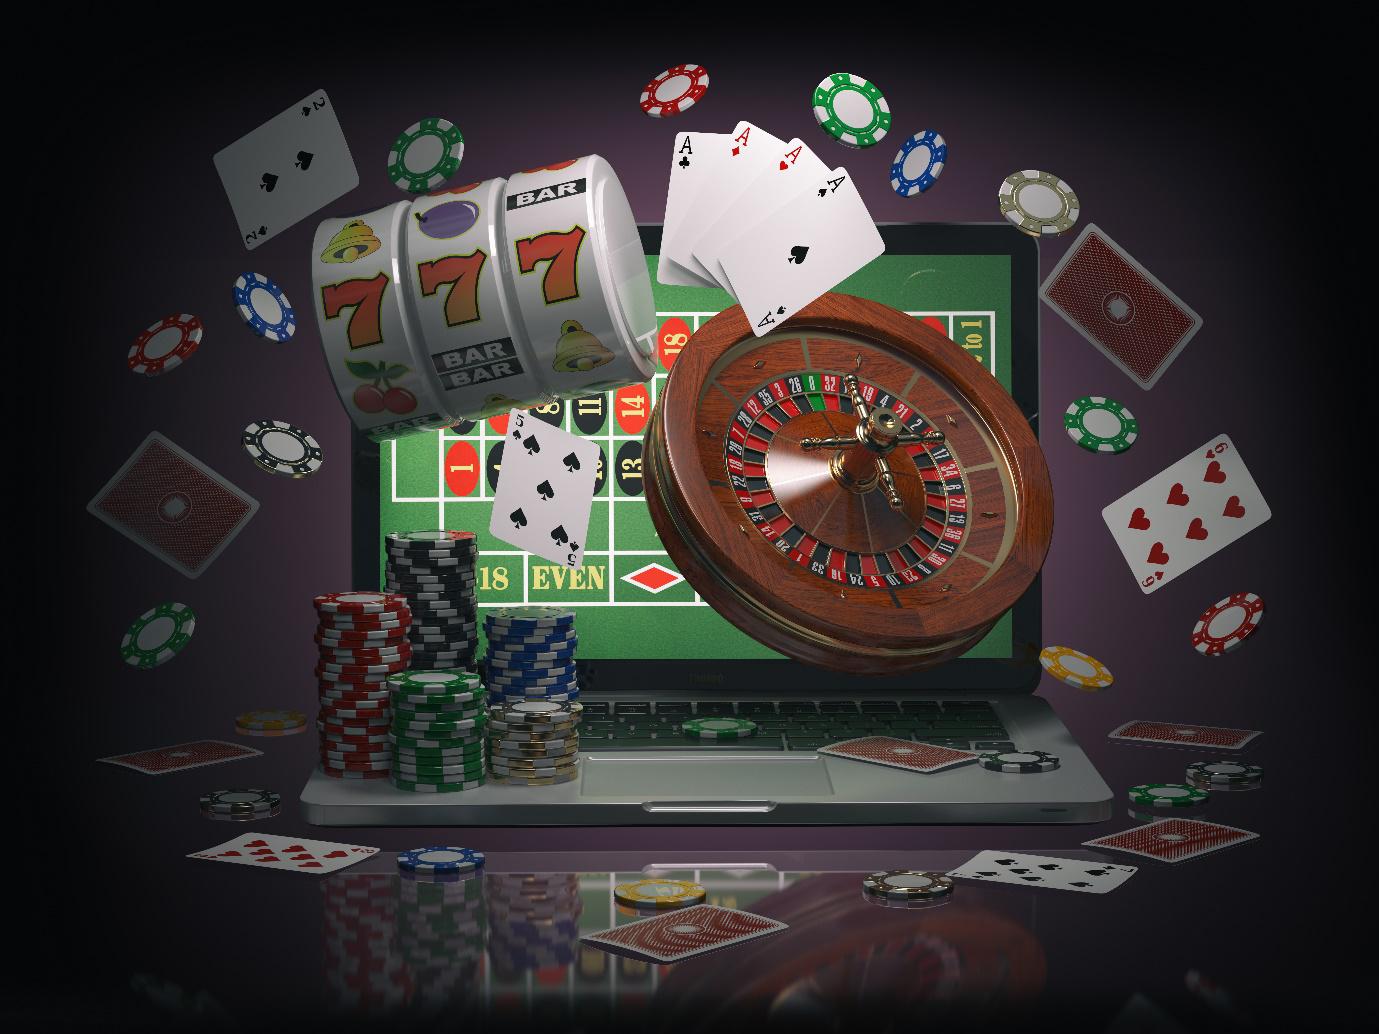 New On Line Casino